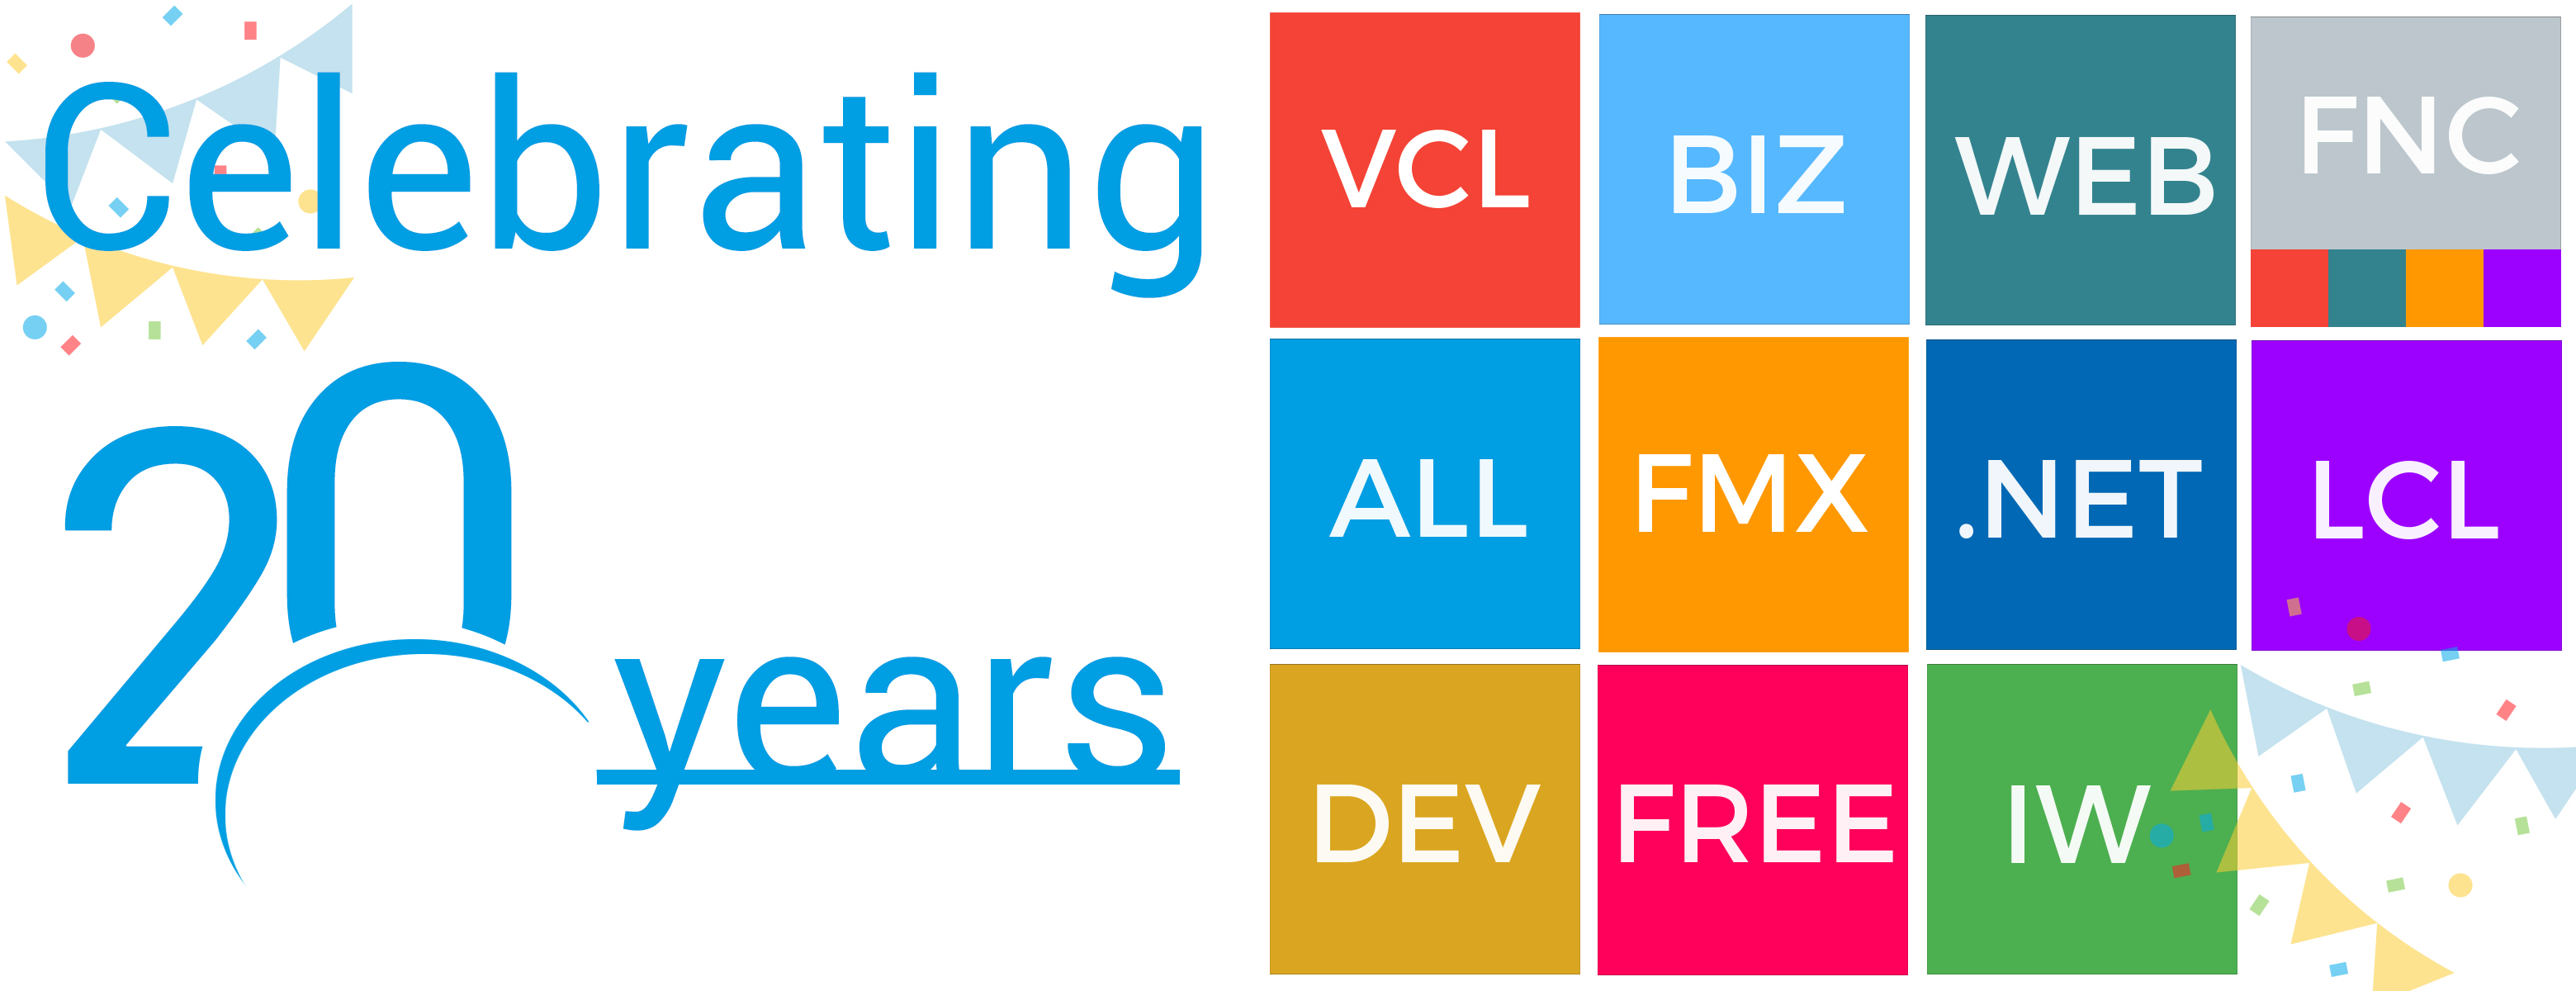 Celebrating 20 days the 20 year company anniversary! | Dimensional Data